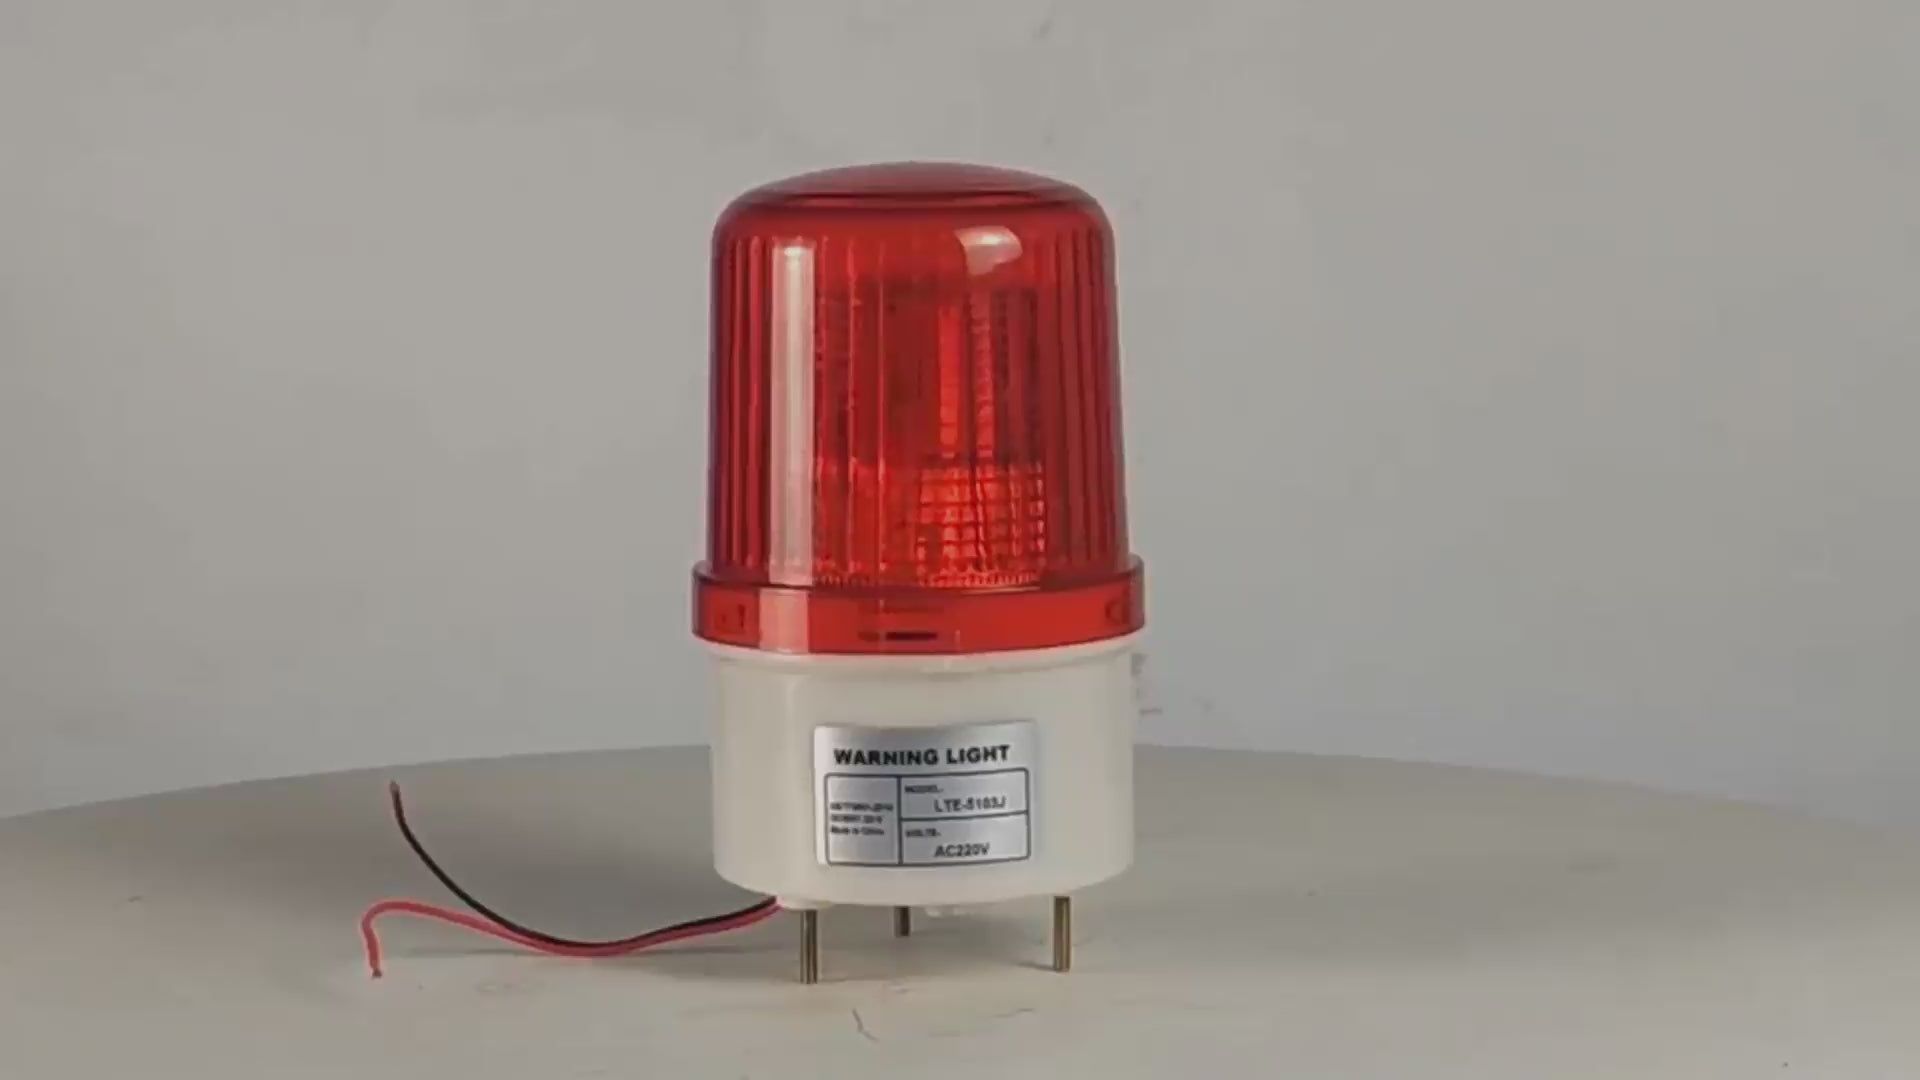 YASONG LED Strobe Light Industrial Warning Beacon Light with 90dB 